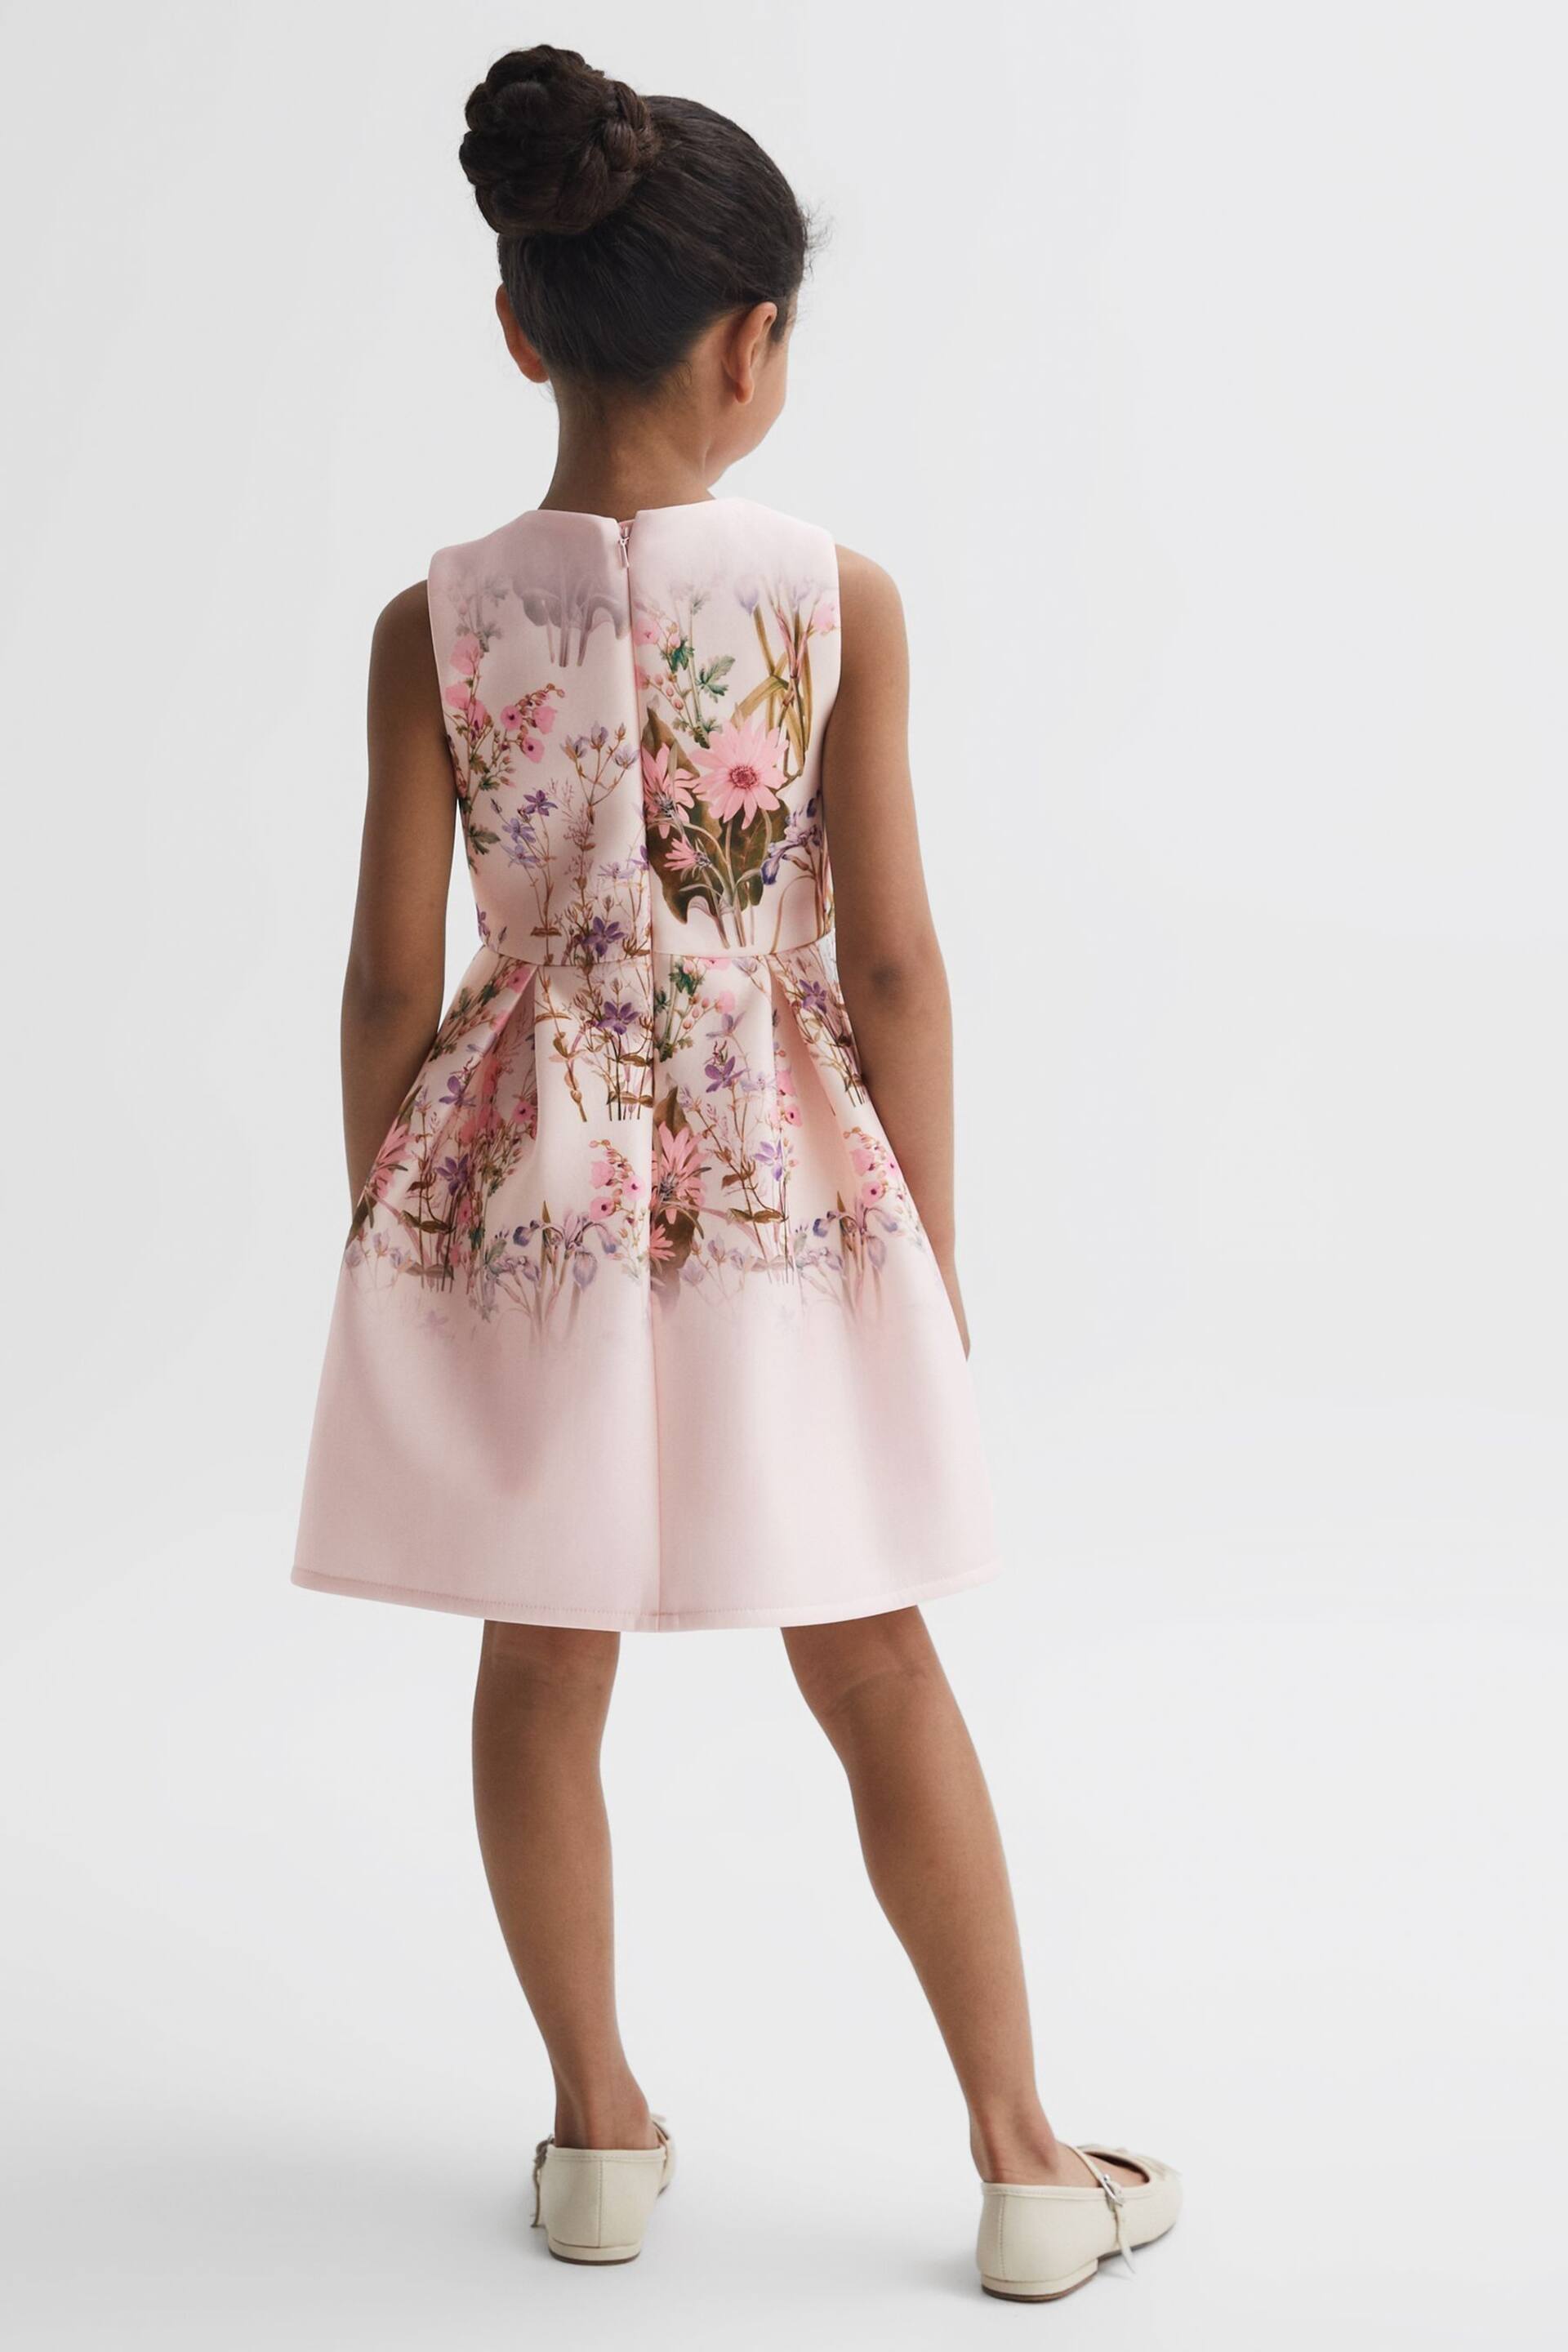 Reiss Multi Emily Junior Scuba Floral Printed Dress - Image 4 of 5